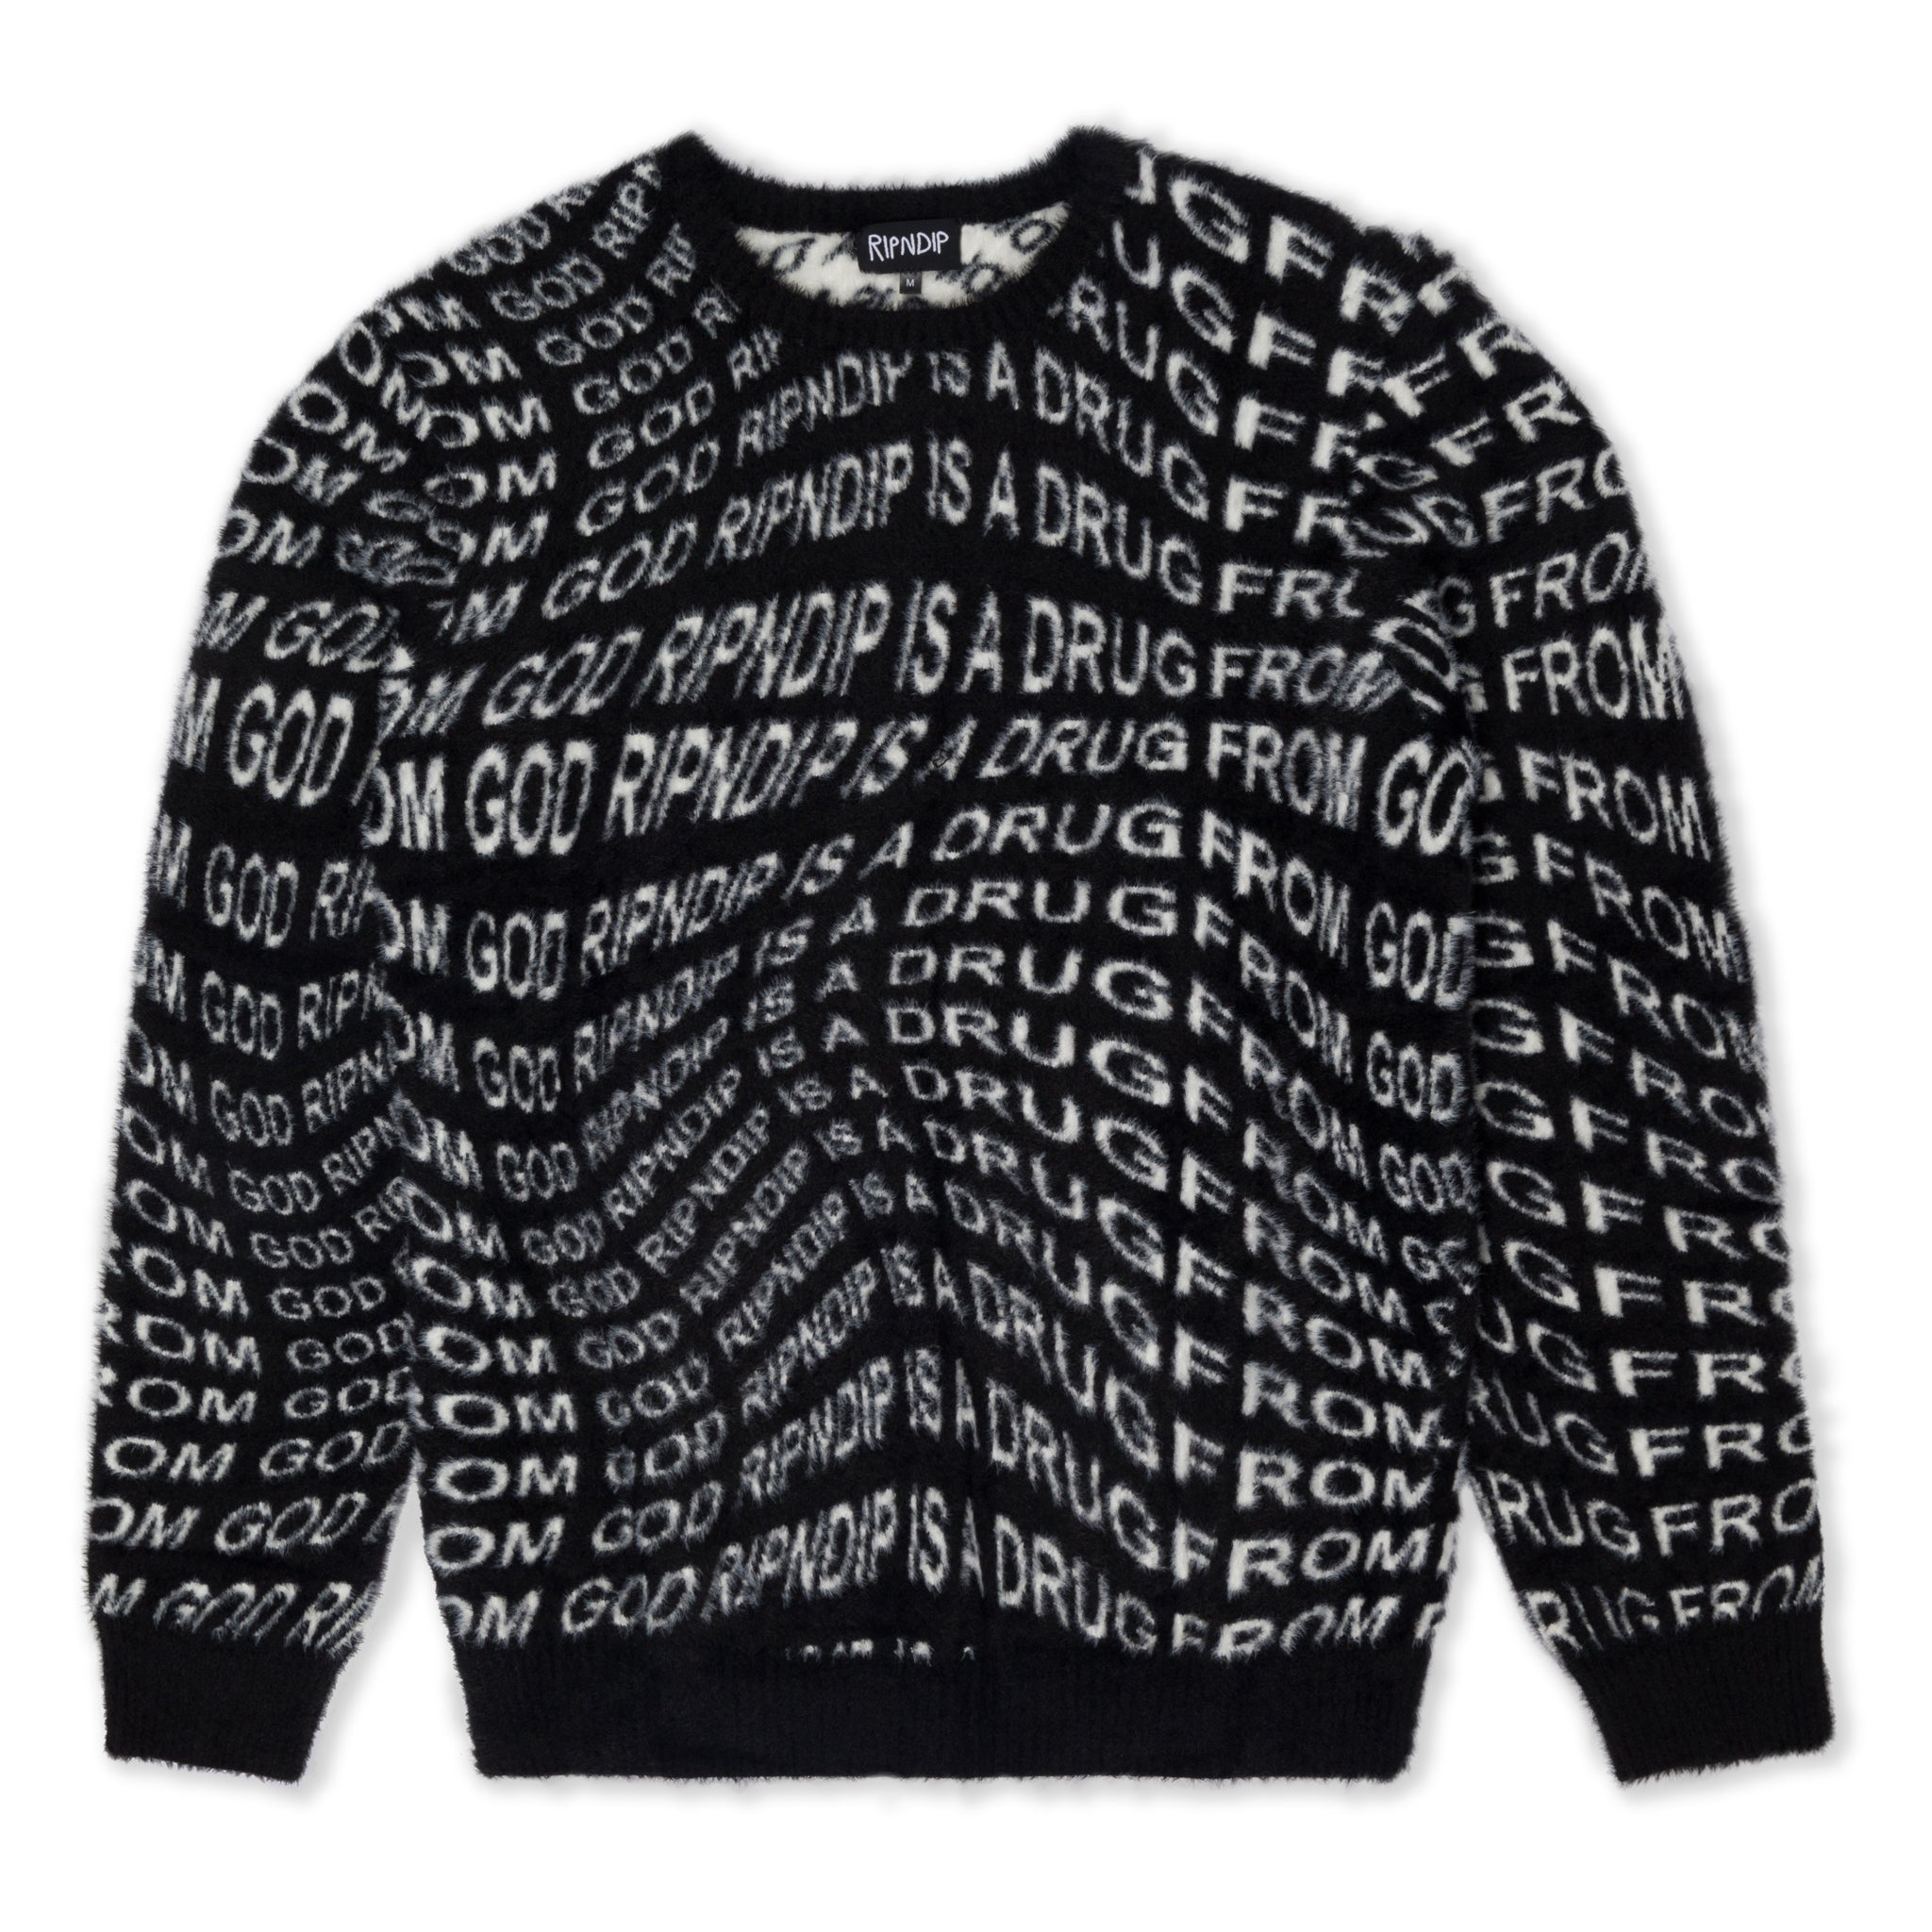 RIPNDIP Drug From God Knit Mohair Sweater (Black)